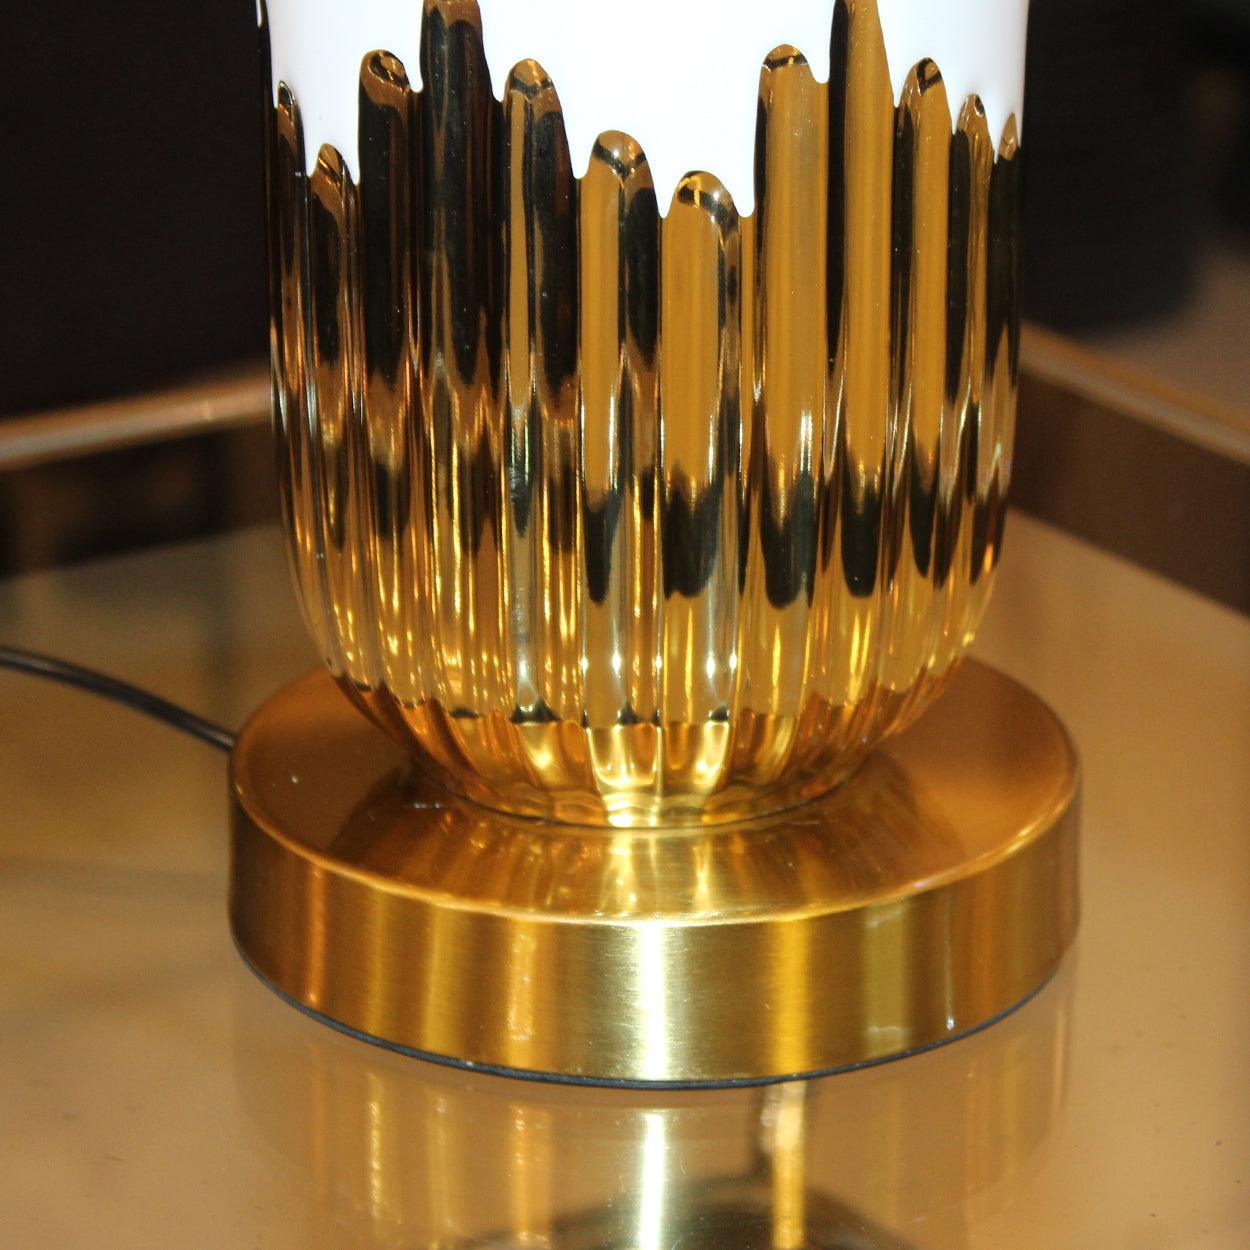 CAPSULE GOLD AND WHITE CERAMIC TABLE LAMP BEDSIDE LAMP - Ankur Lighting